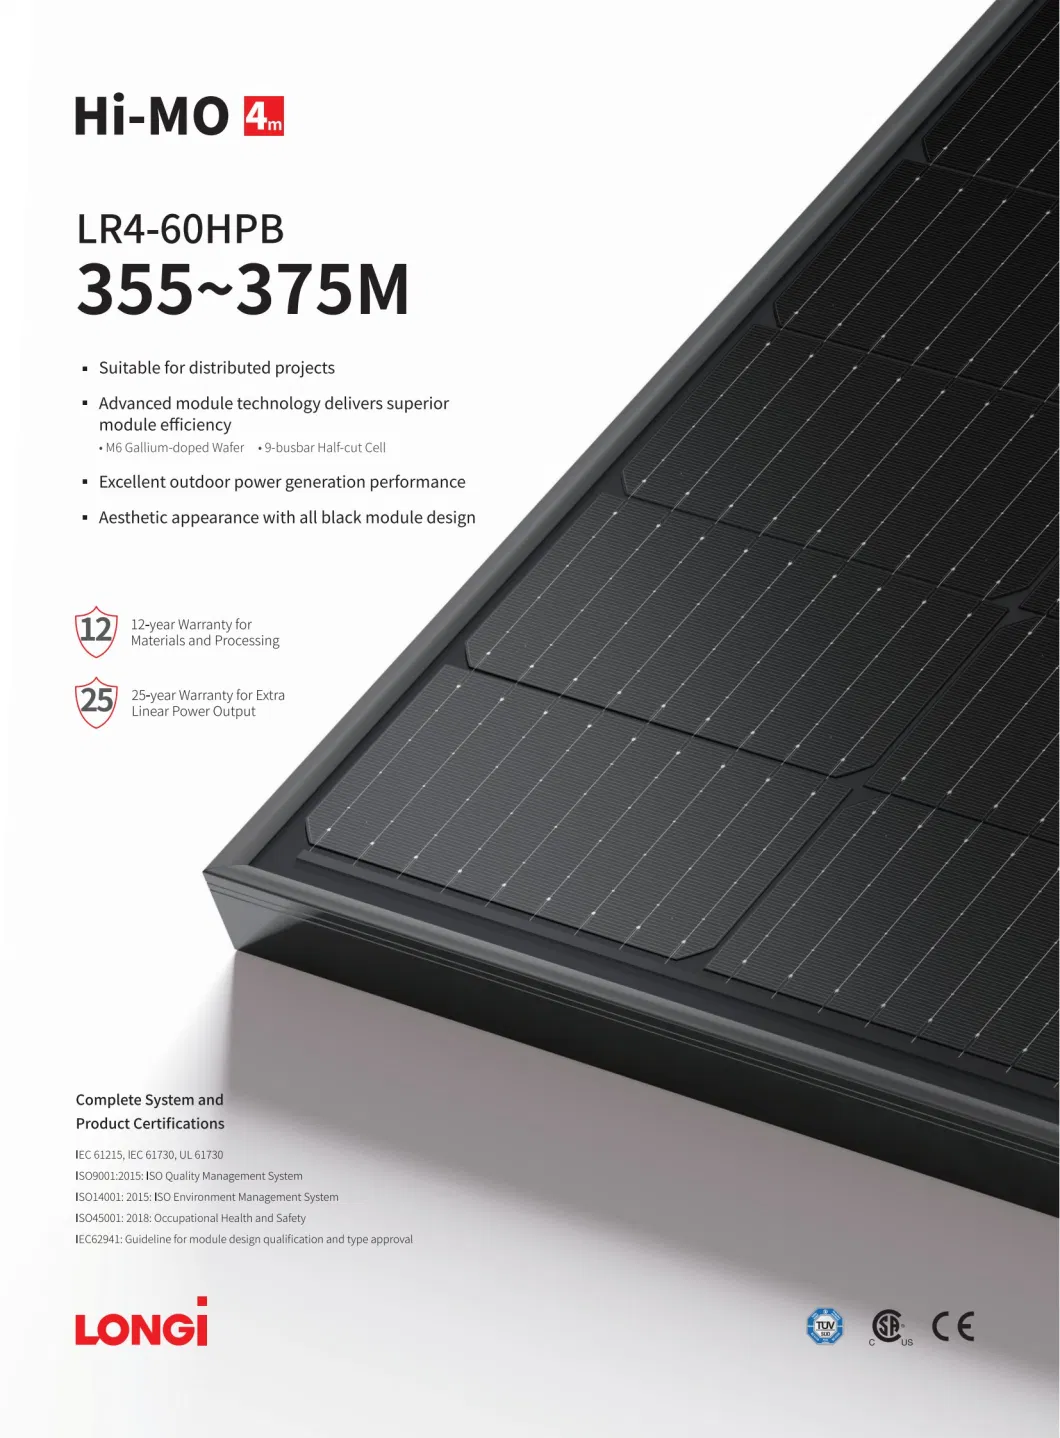 460W 415W Longi China Jinko Price PV Solar Panel Hi-Mo 4m